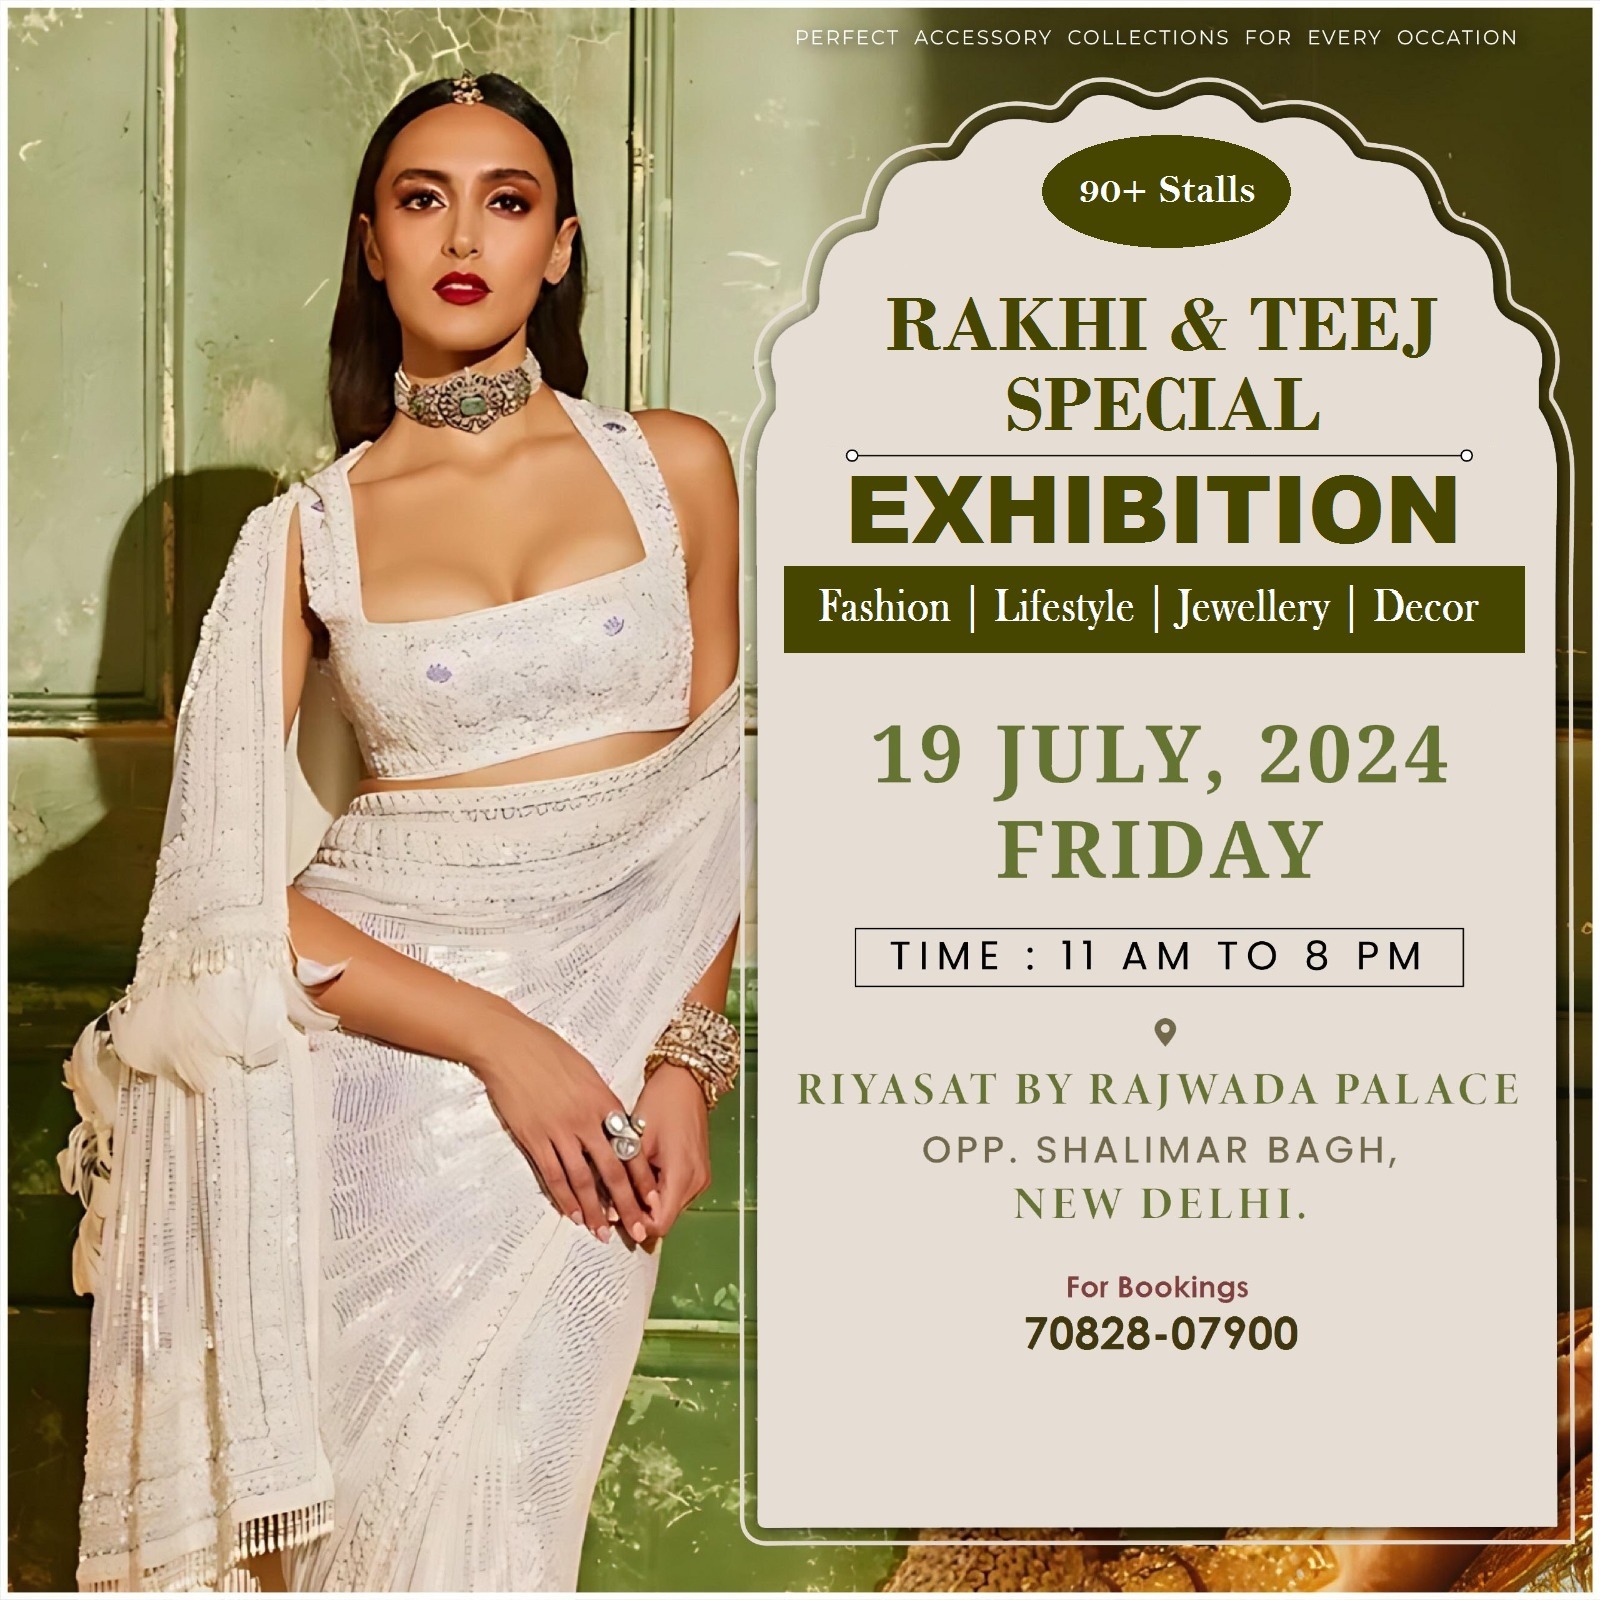 Rakhi & Teej Special Exhibition